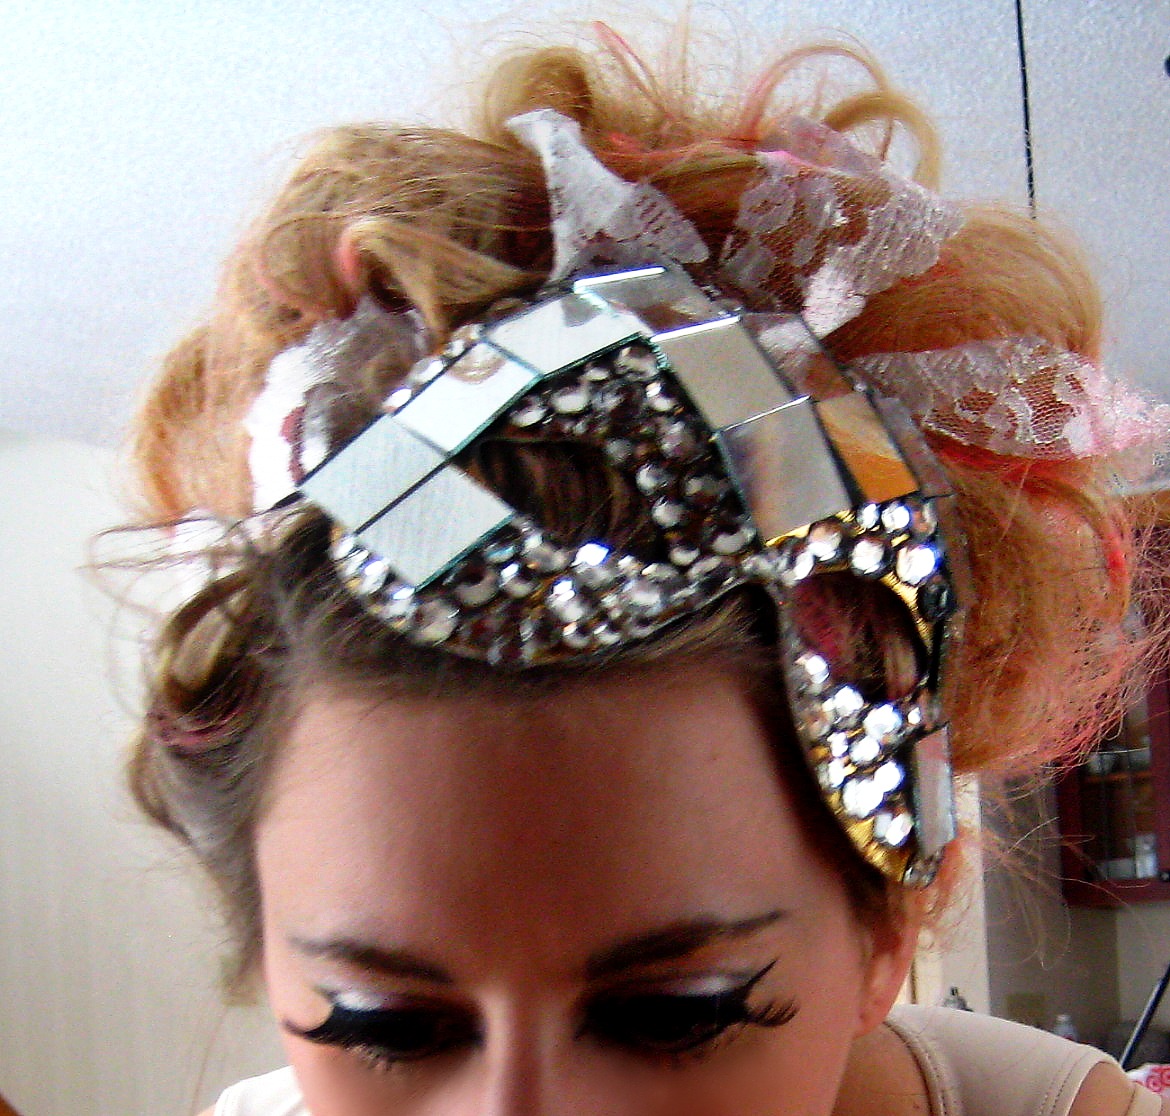 http://3.bp.blogspot.com/-rOyTD-XYNm4/TVhvZ6CAGyI/AAAAAAAACqY/mCjcg6jB_Q8/s1600/Lady+gaga++disco+mask+mirrors+big+hair+with+lace.jpg